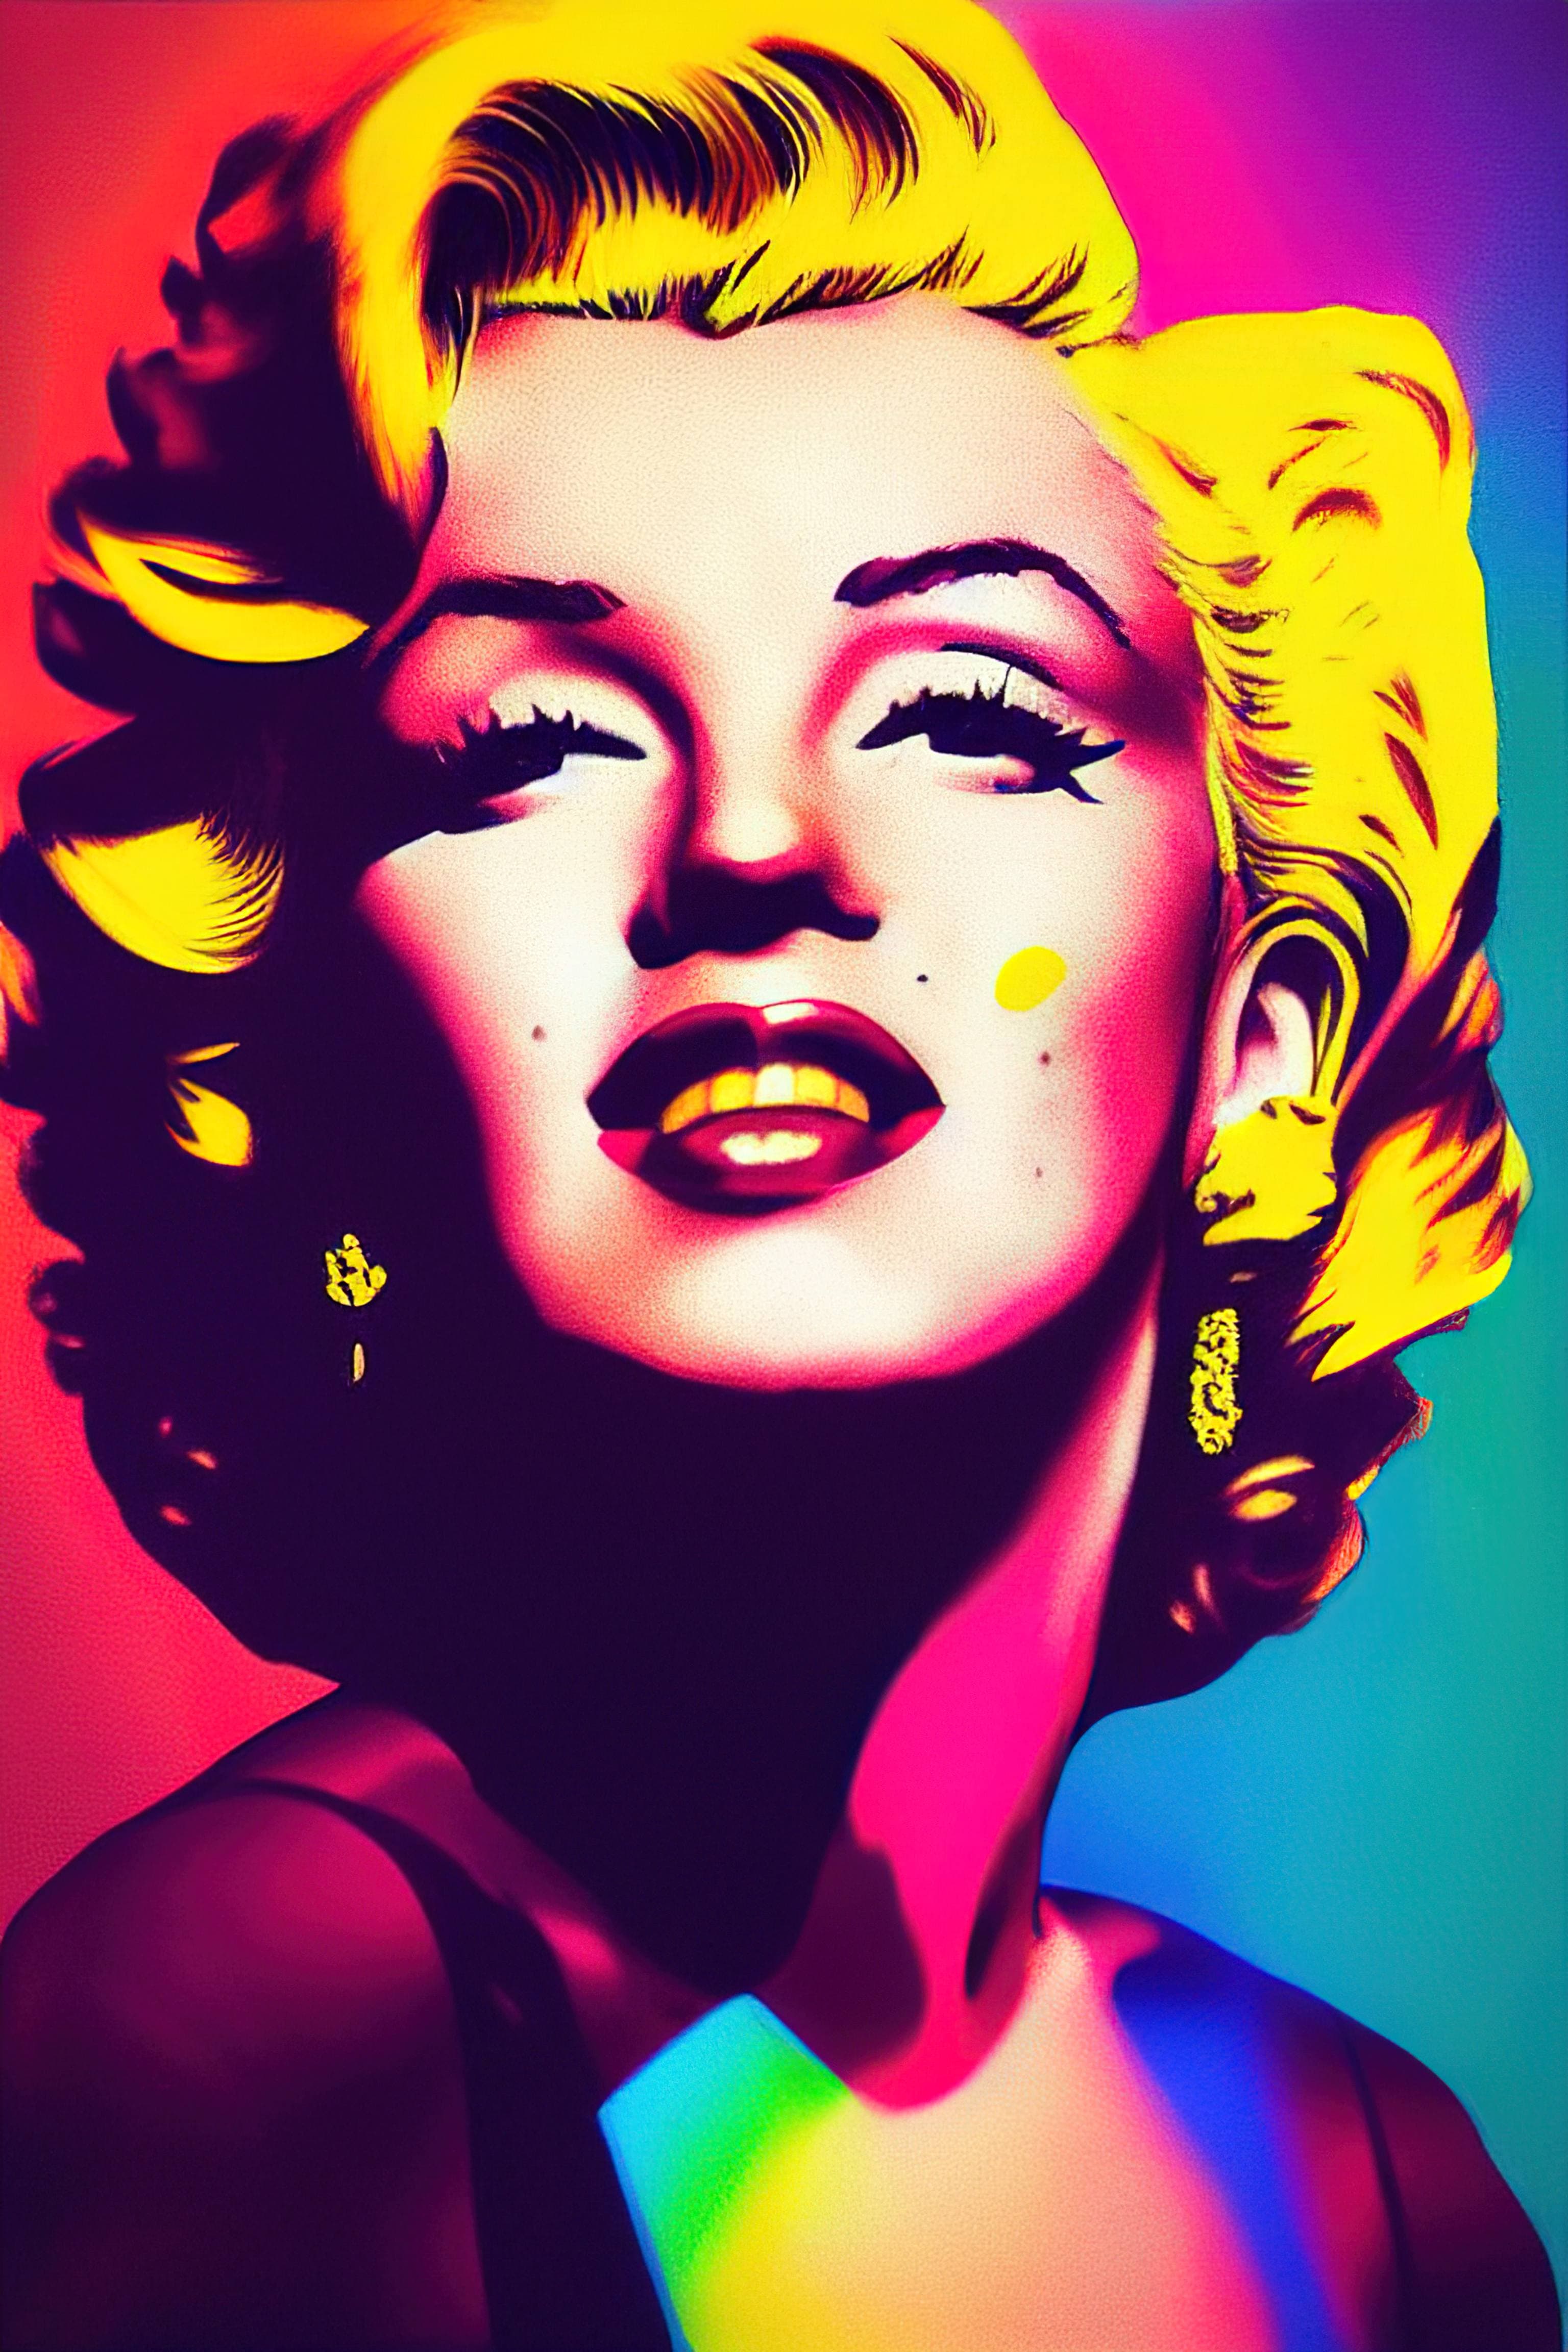 Marilyn Monroe in a colorful digital art paint